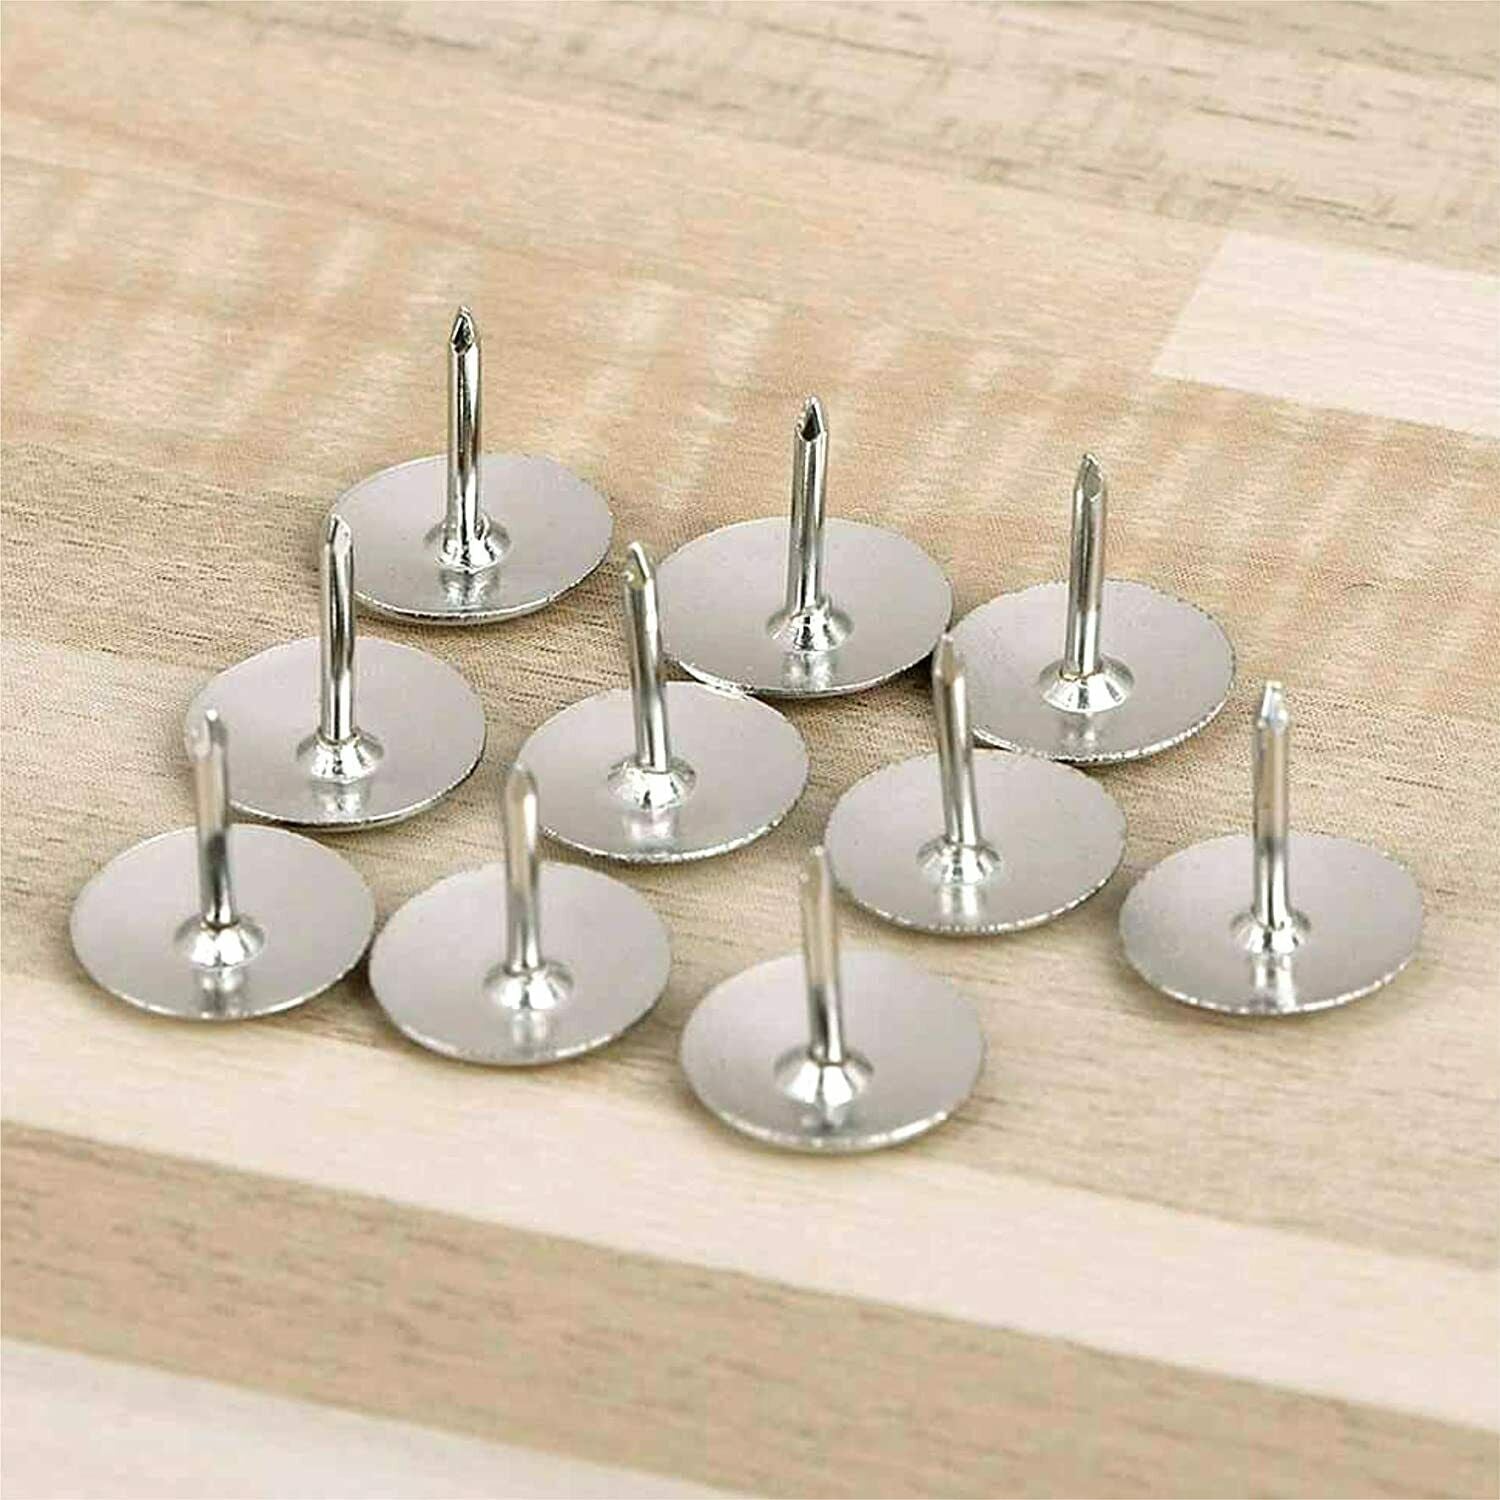 ThumTacks Rubex Push Pins Silver Metal Head Push Pins, Standard